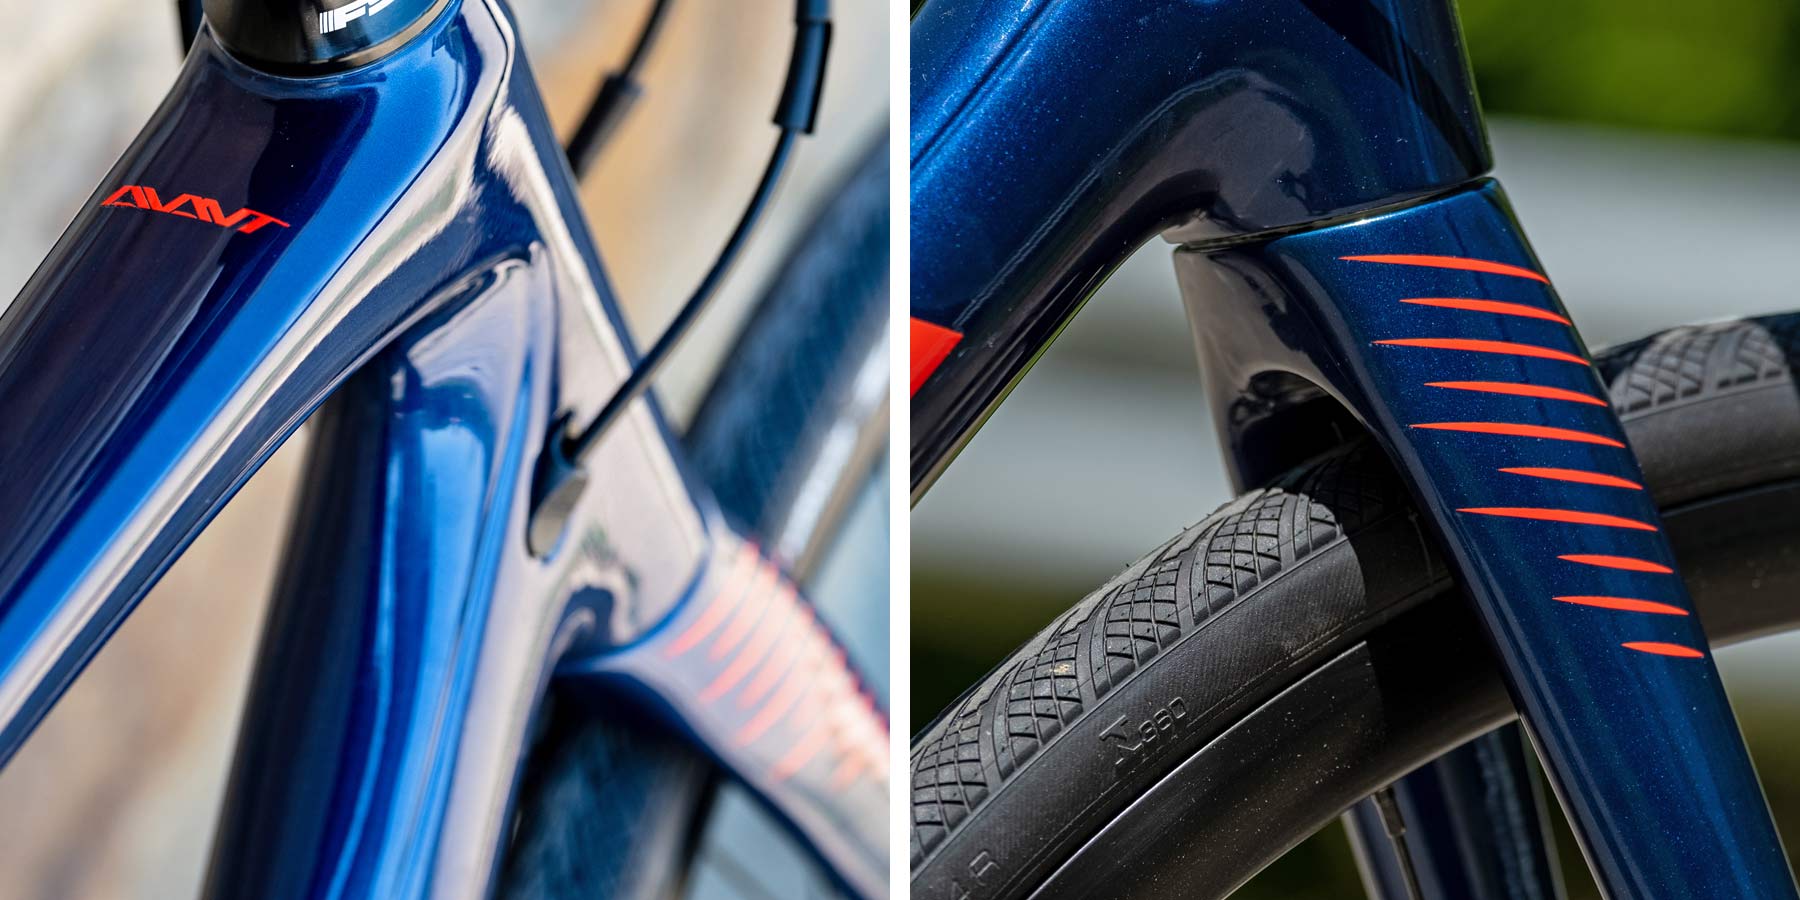 2019 Orbea Avant endurance road bike, MyO customizes granfondo disc brake carbon road bike